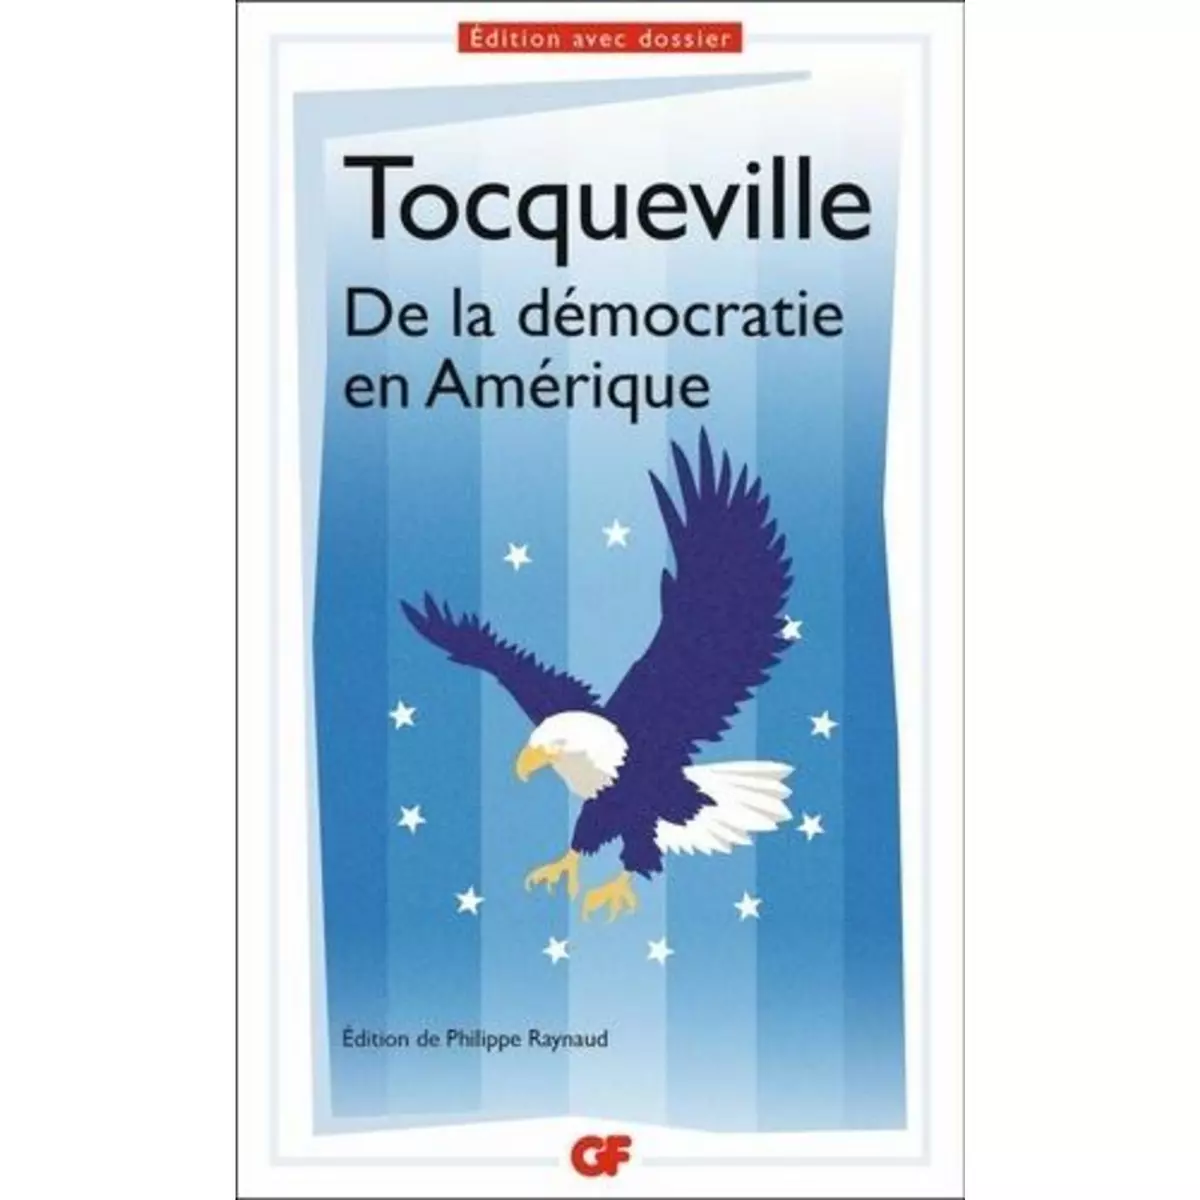  DE LA DEMOCRATIE EN AMERIQUE, Tocqueville Alexis de